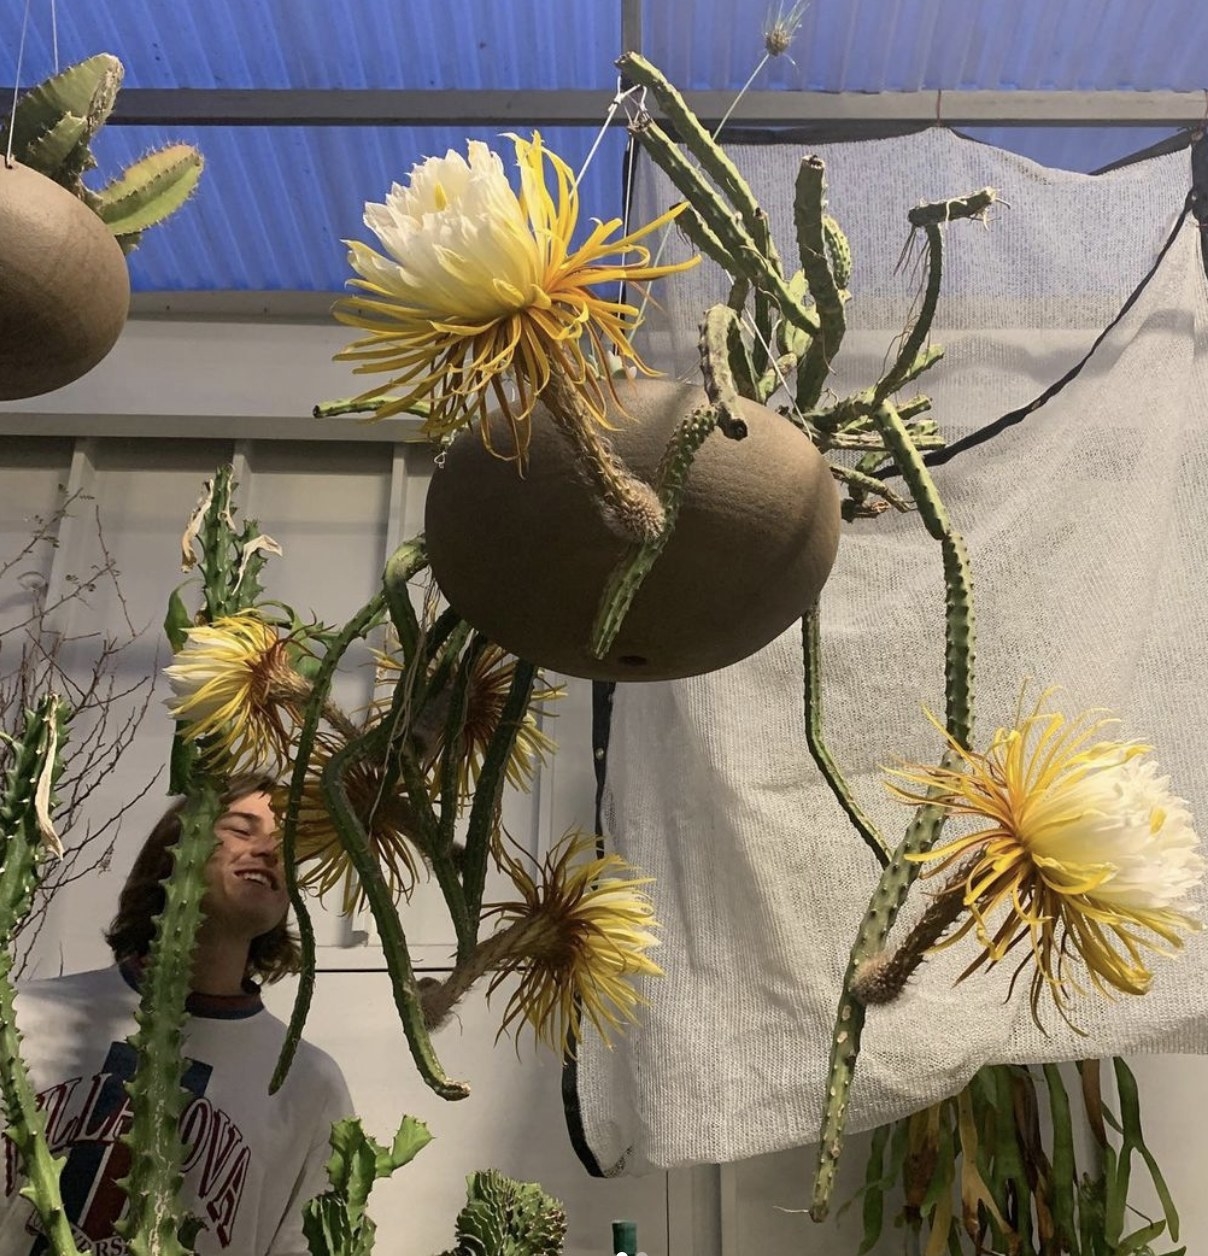 Hanging cacti plants inside